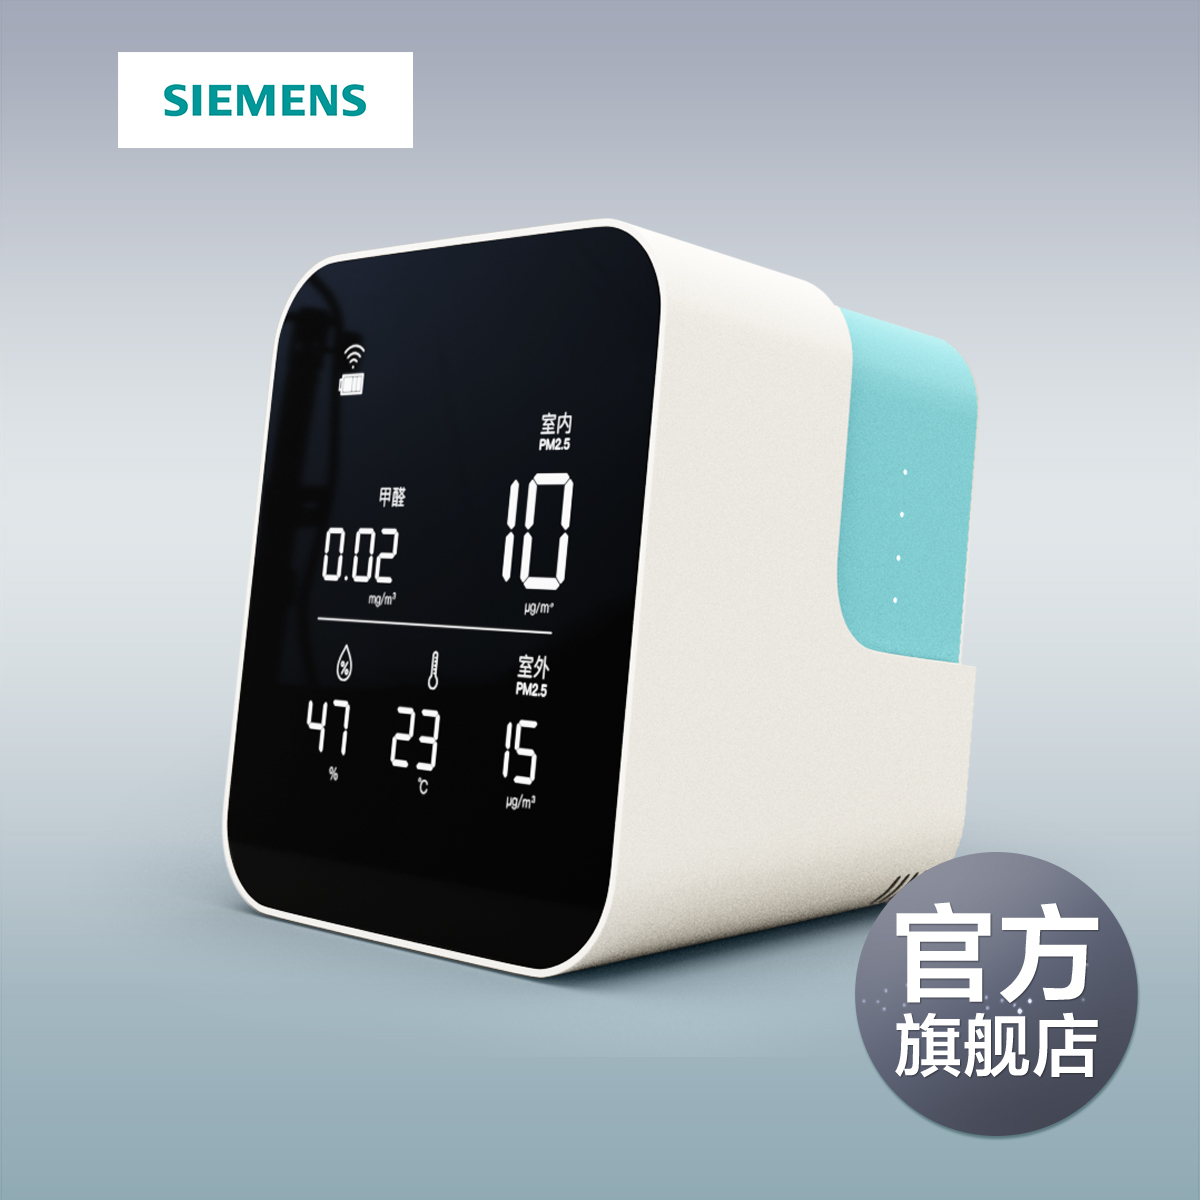 Siemens Xirui series intelligent simple portable PM2.5 air detector temperature and humidity formaldehyde detector